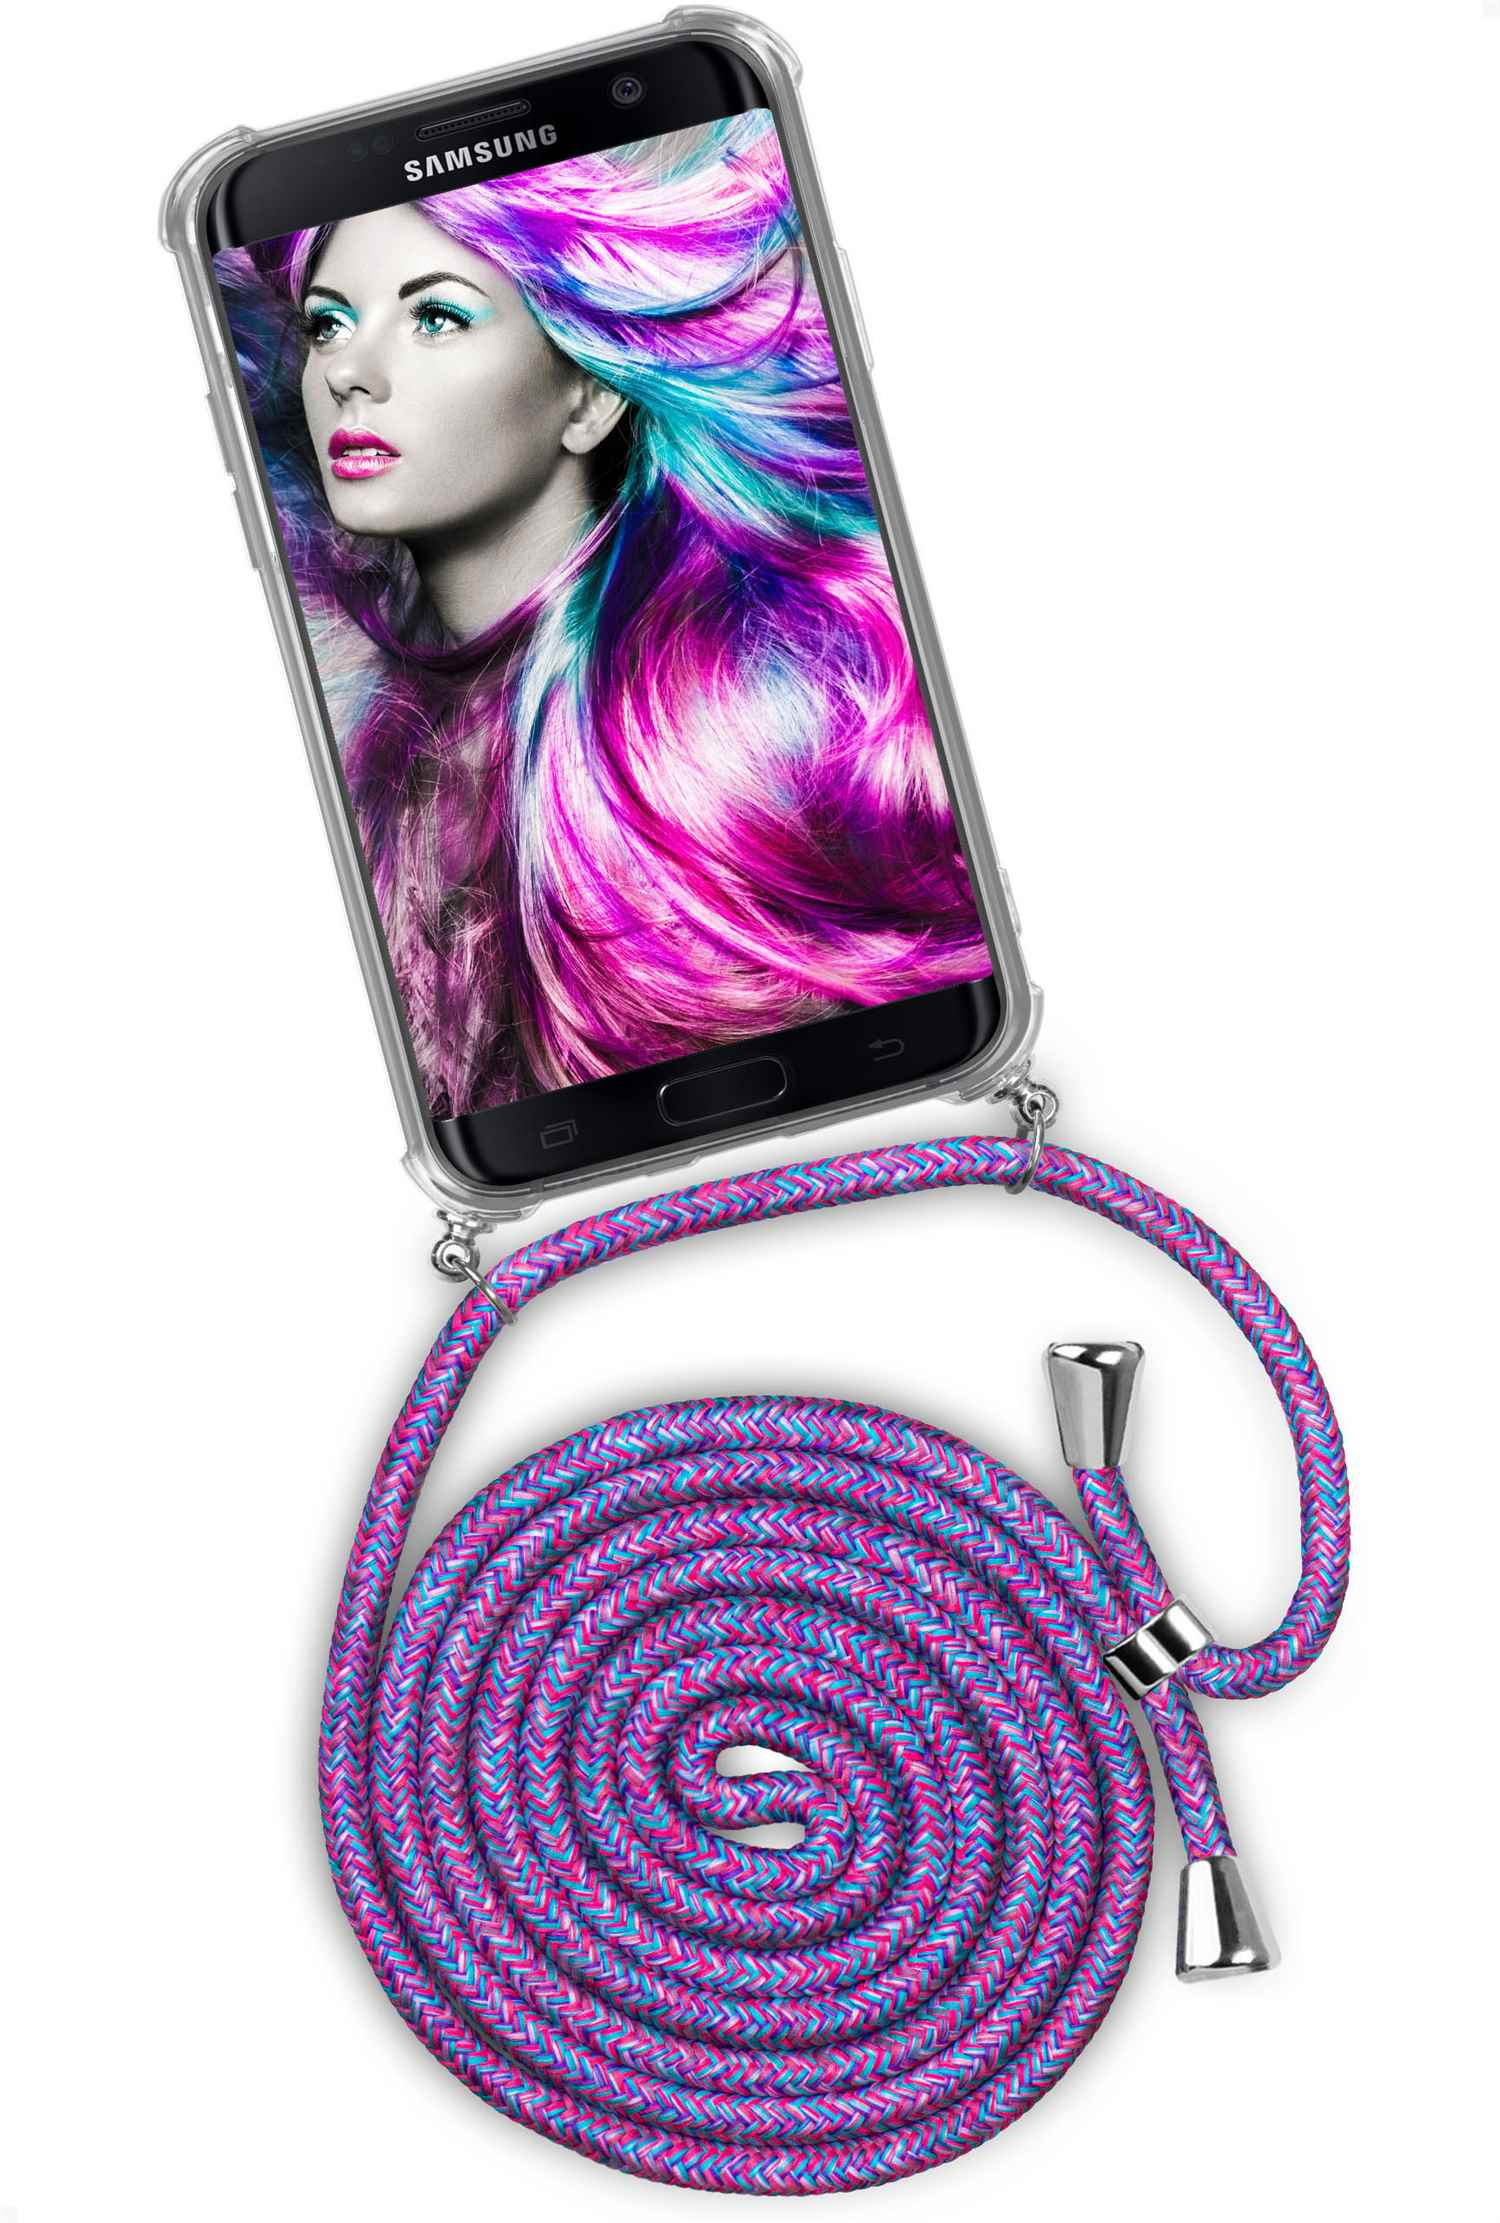 S7 Crazy Galaxy Samsung, Twist Unicorn Case, ONEFLOW Edge, Backcover, (Silber)